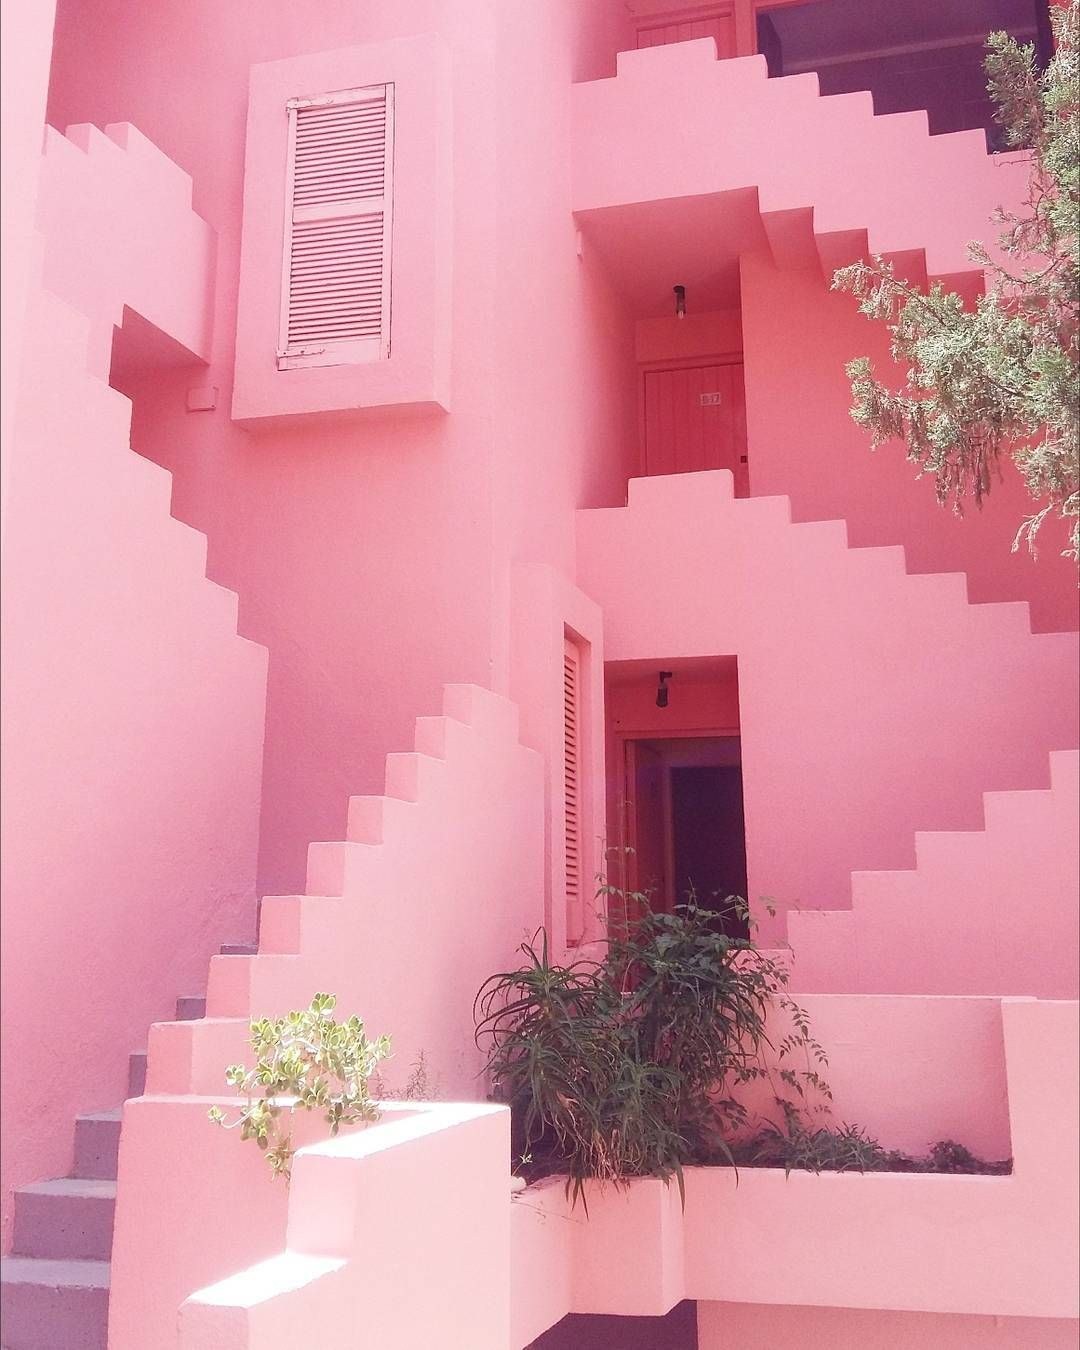 Фото розового дома. Дом розового цвета. Розовый домик. Красивый розовый дом. Домики в розовых тонах.